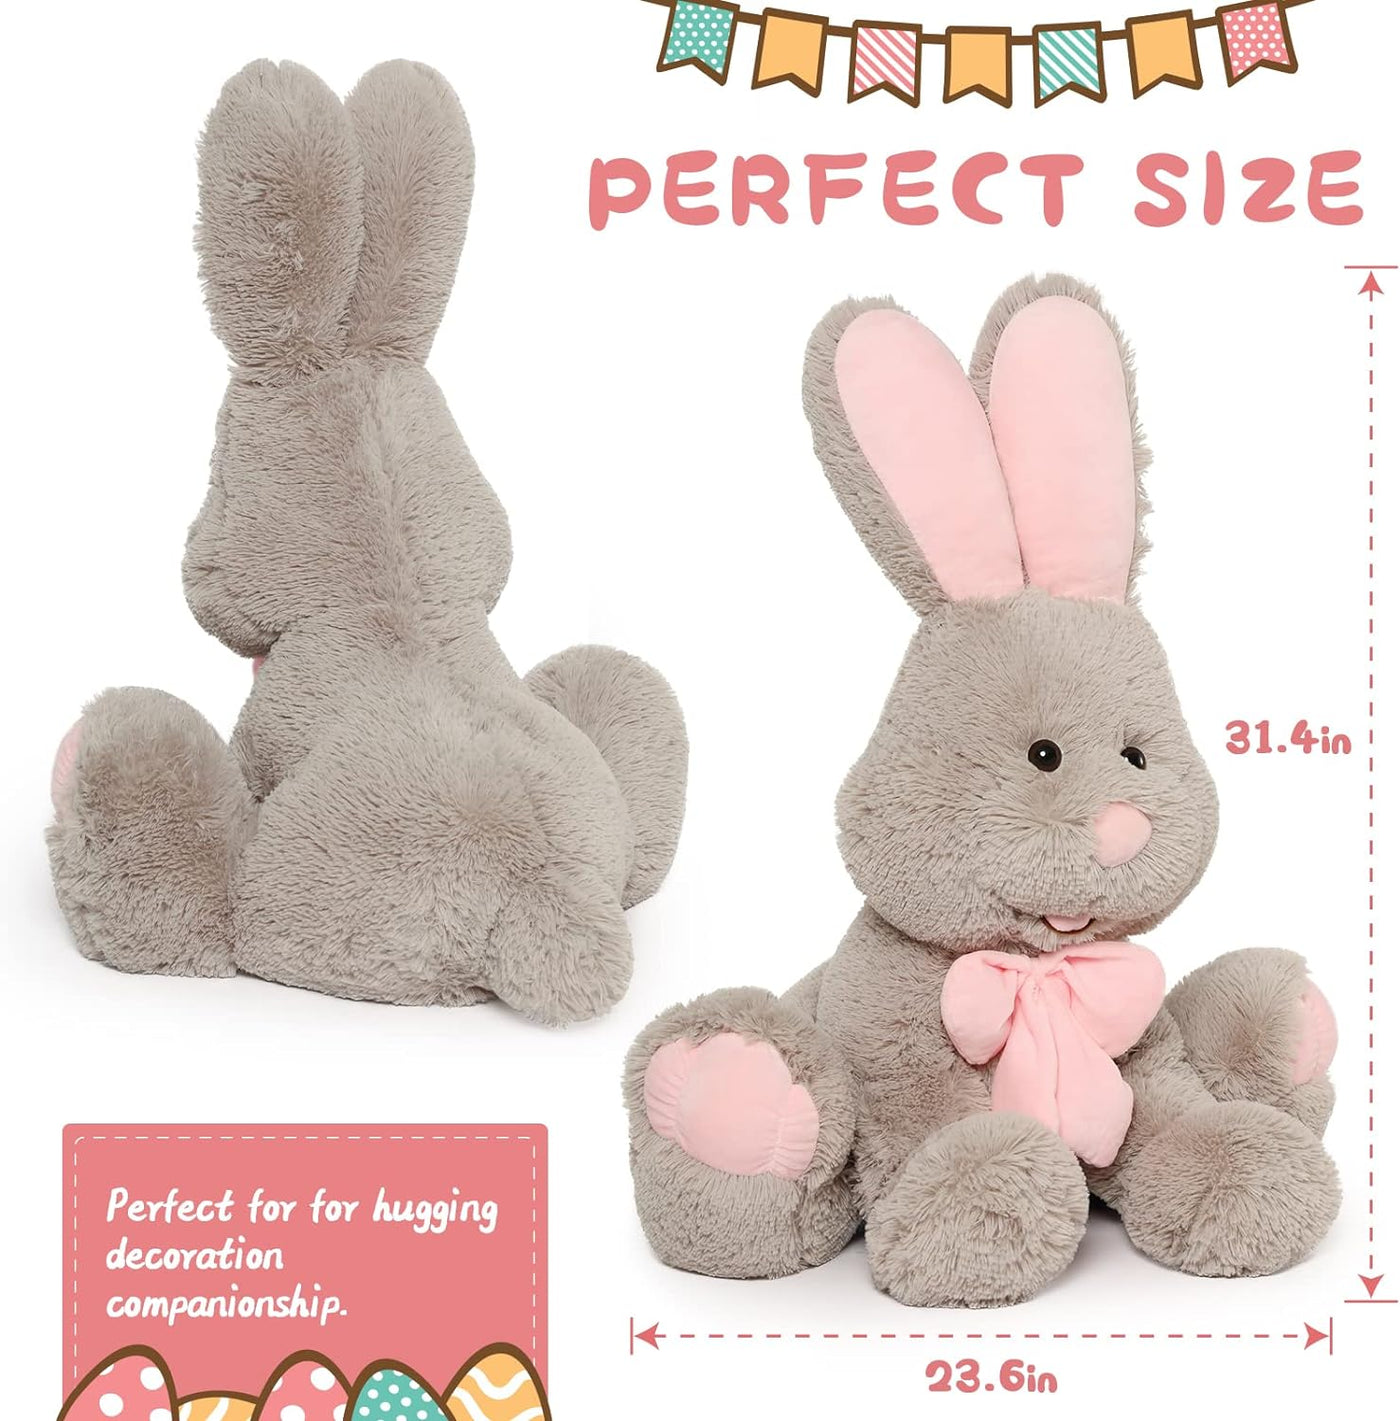 Big Bunny Plush Toy, Grey, 31.4 Inches